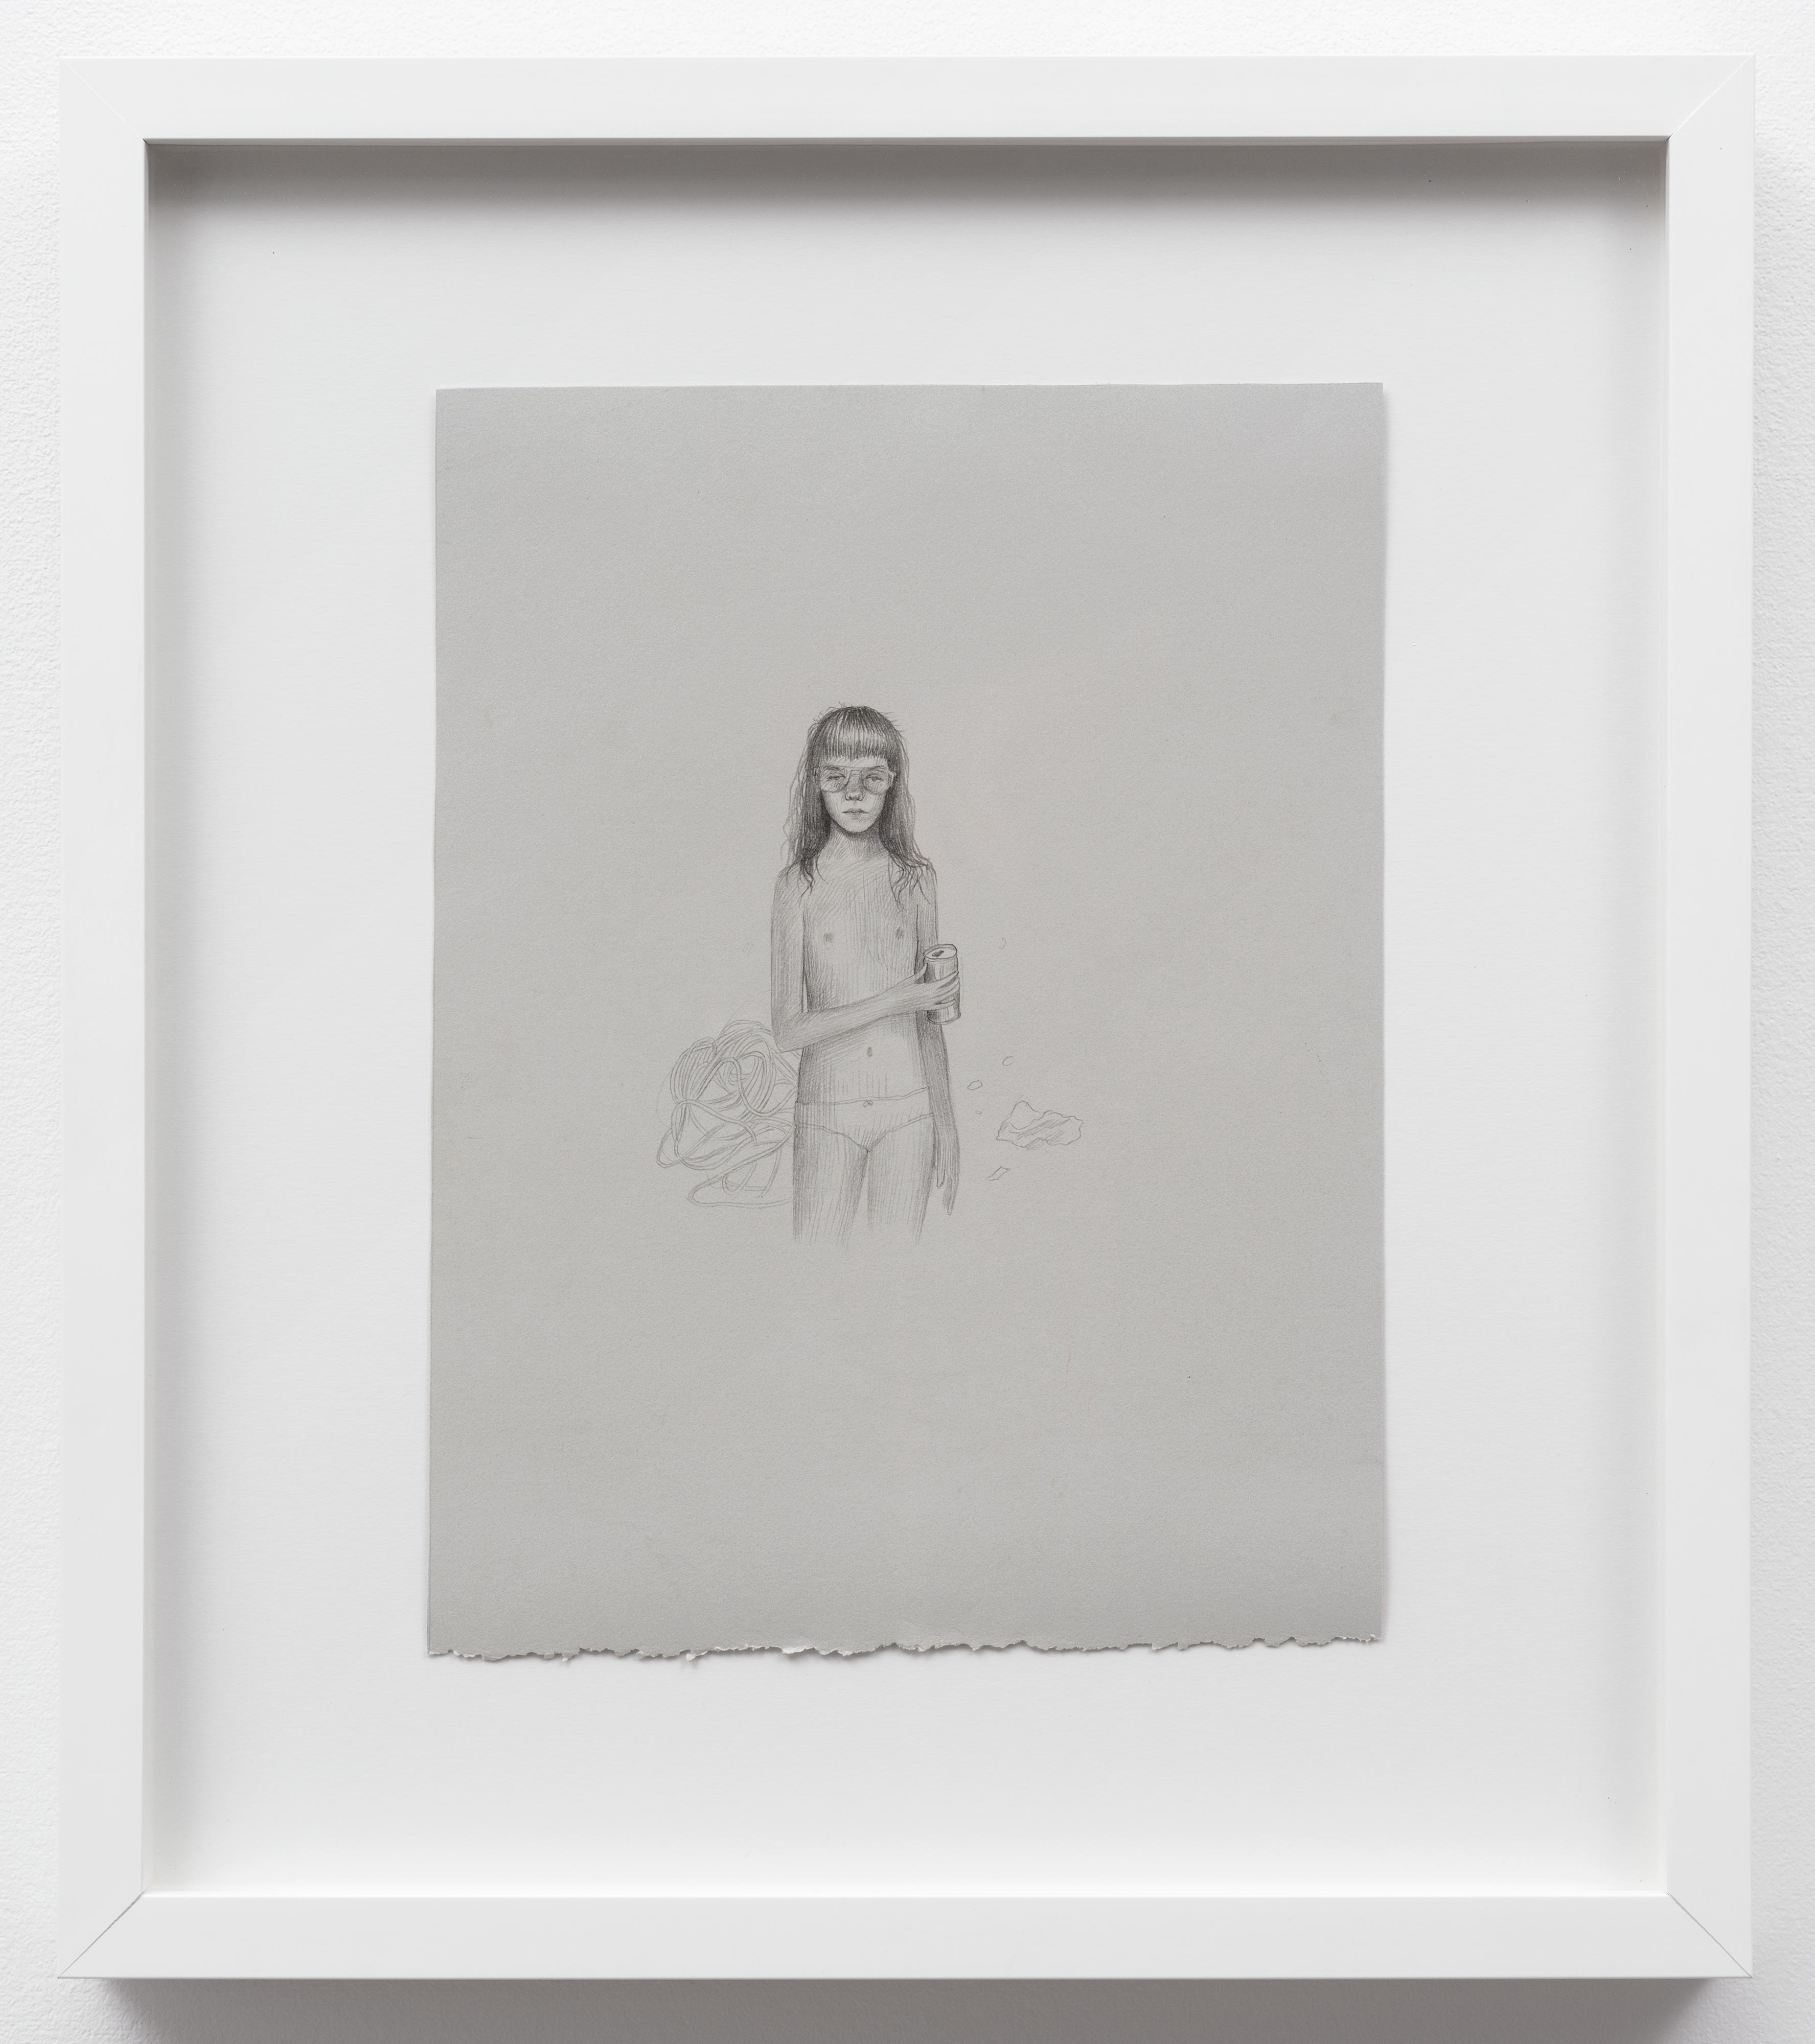 Brandi Twilley<br>Self-Portrait<br>2014<br>Graphite on gray paper<br>9 x 11.5 in (23 x 29 cm)